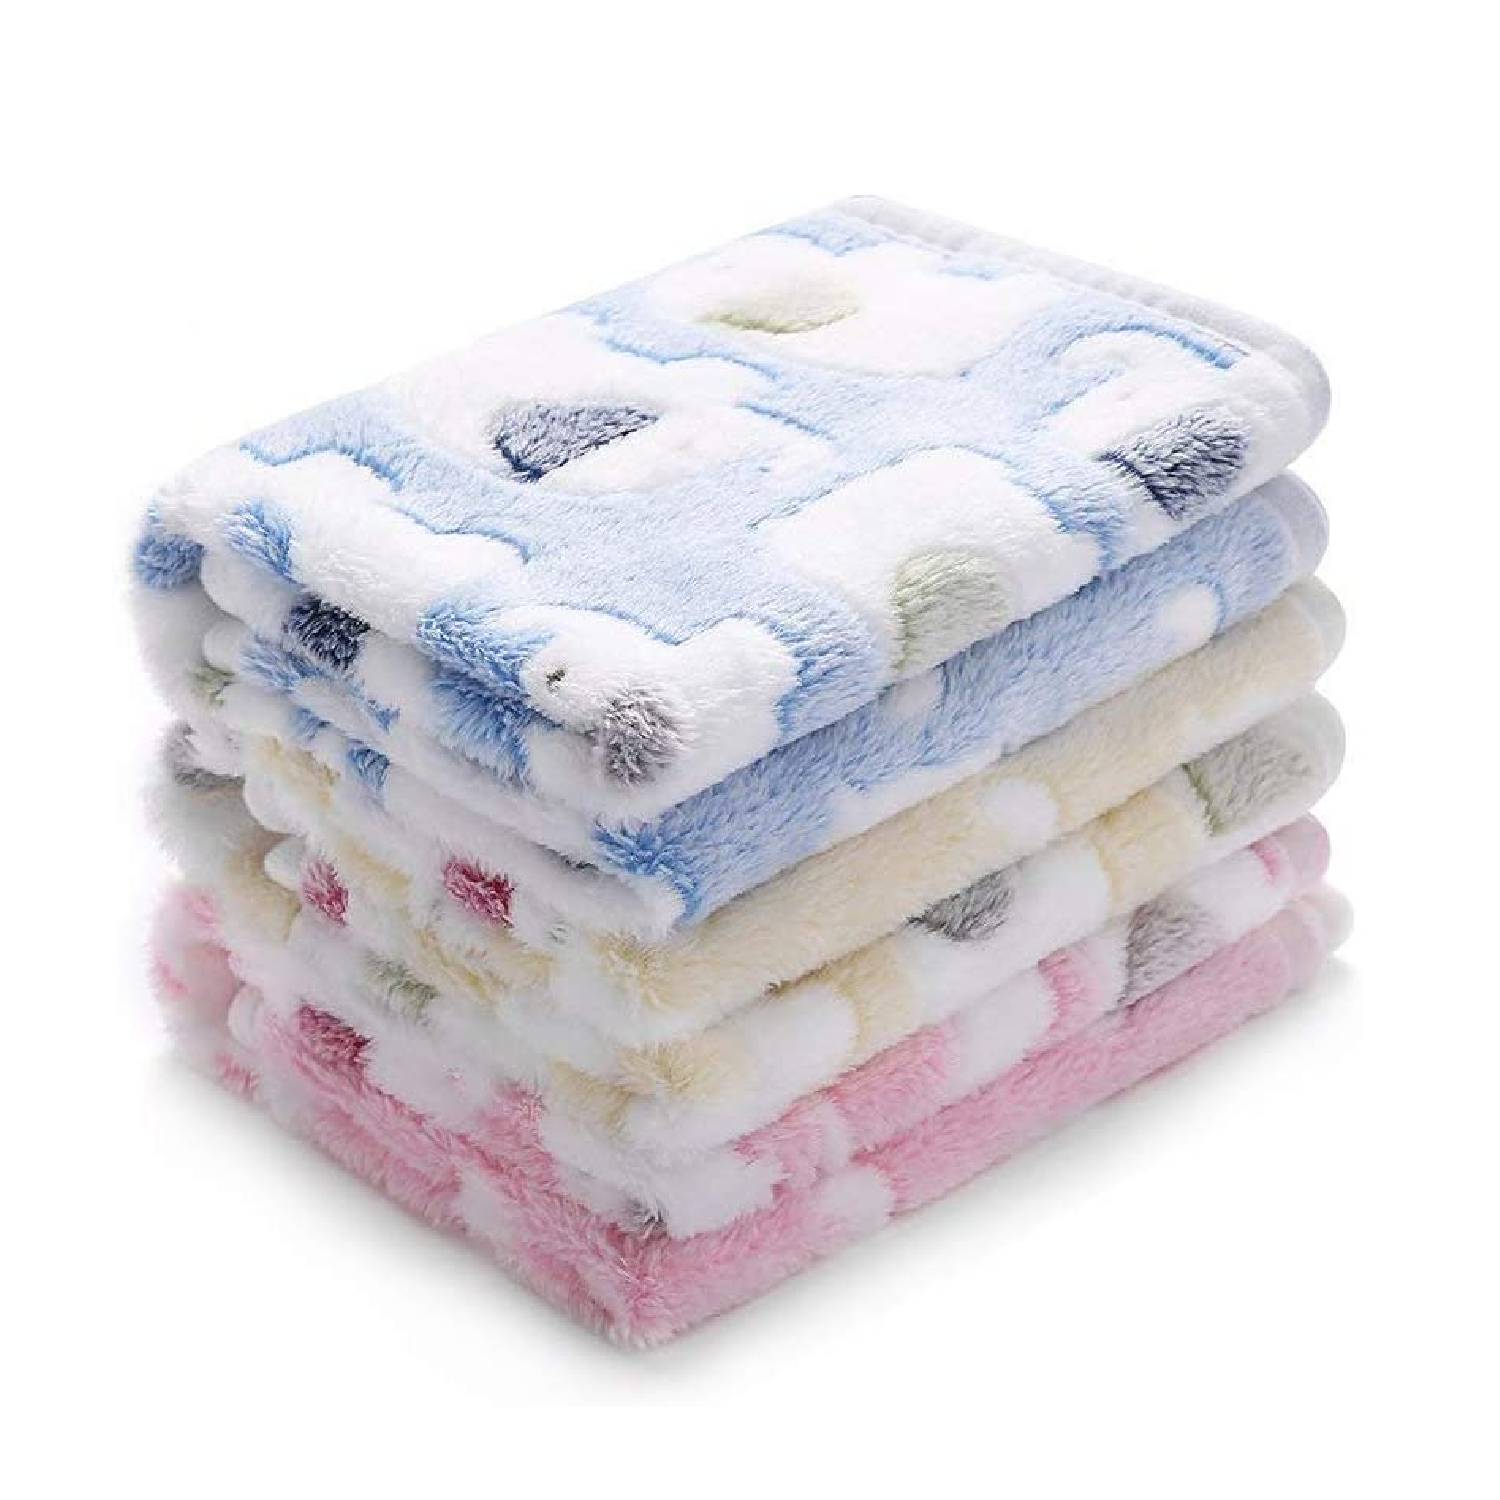 1 pack of 3 Super Soft Pet Blankets